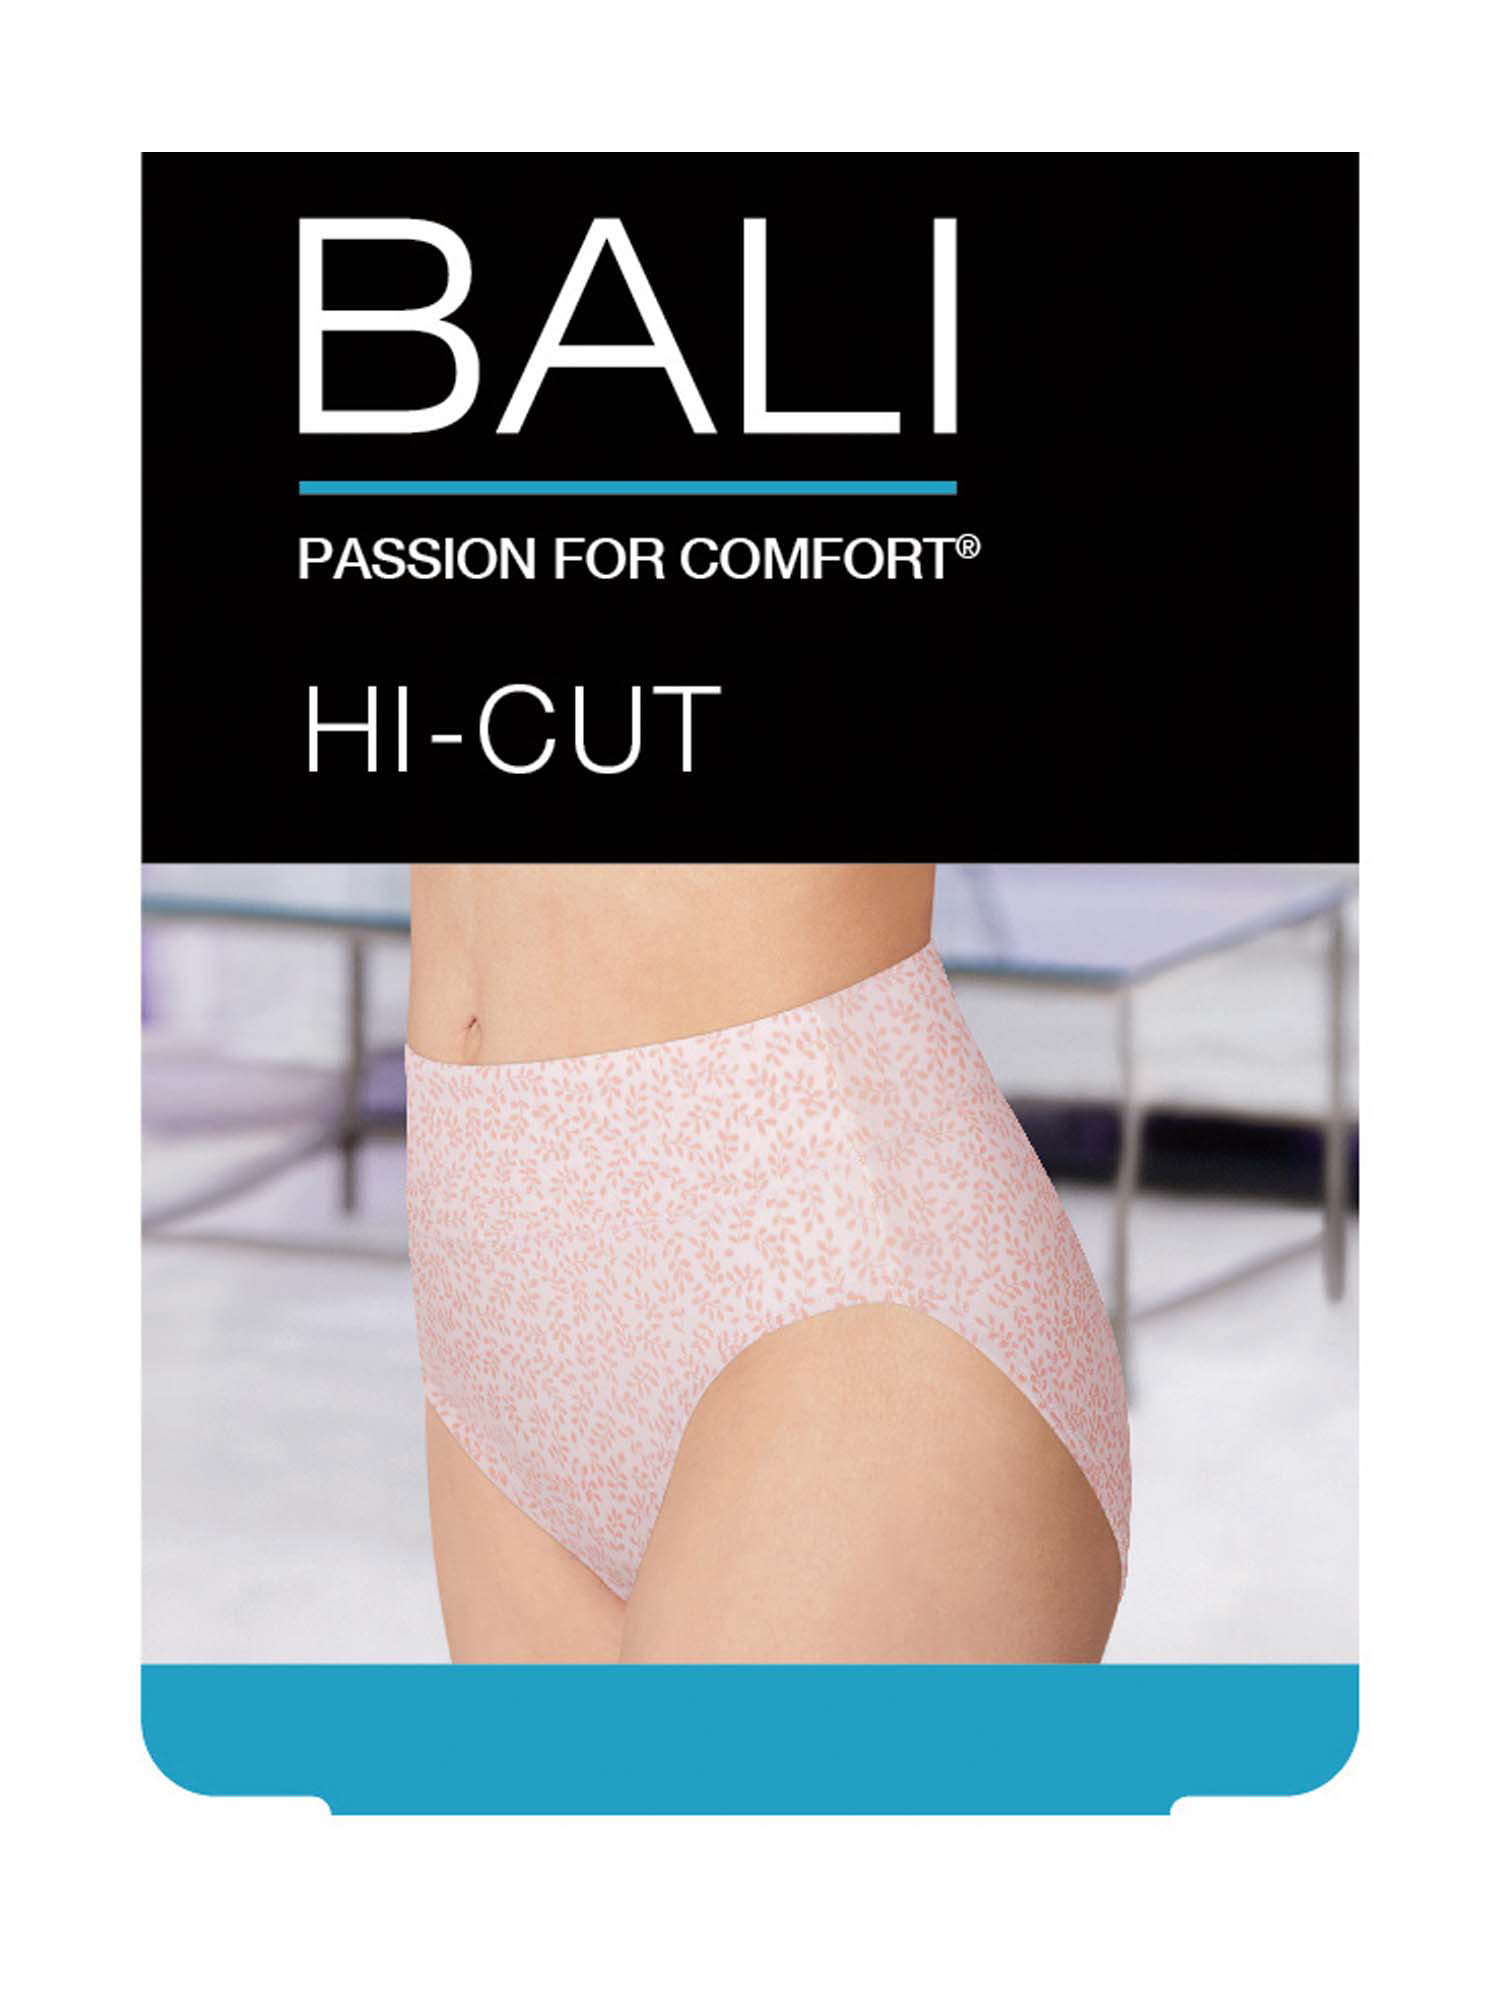 Bali Nude Passion For Comfort Hi-Cut Panty Women's Size Medium NEW